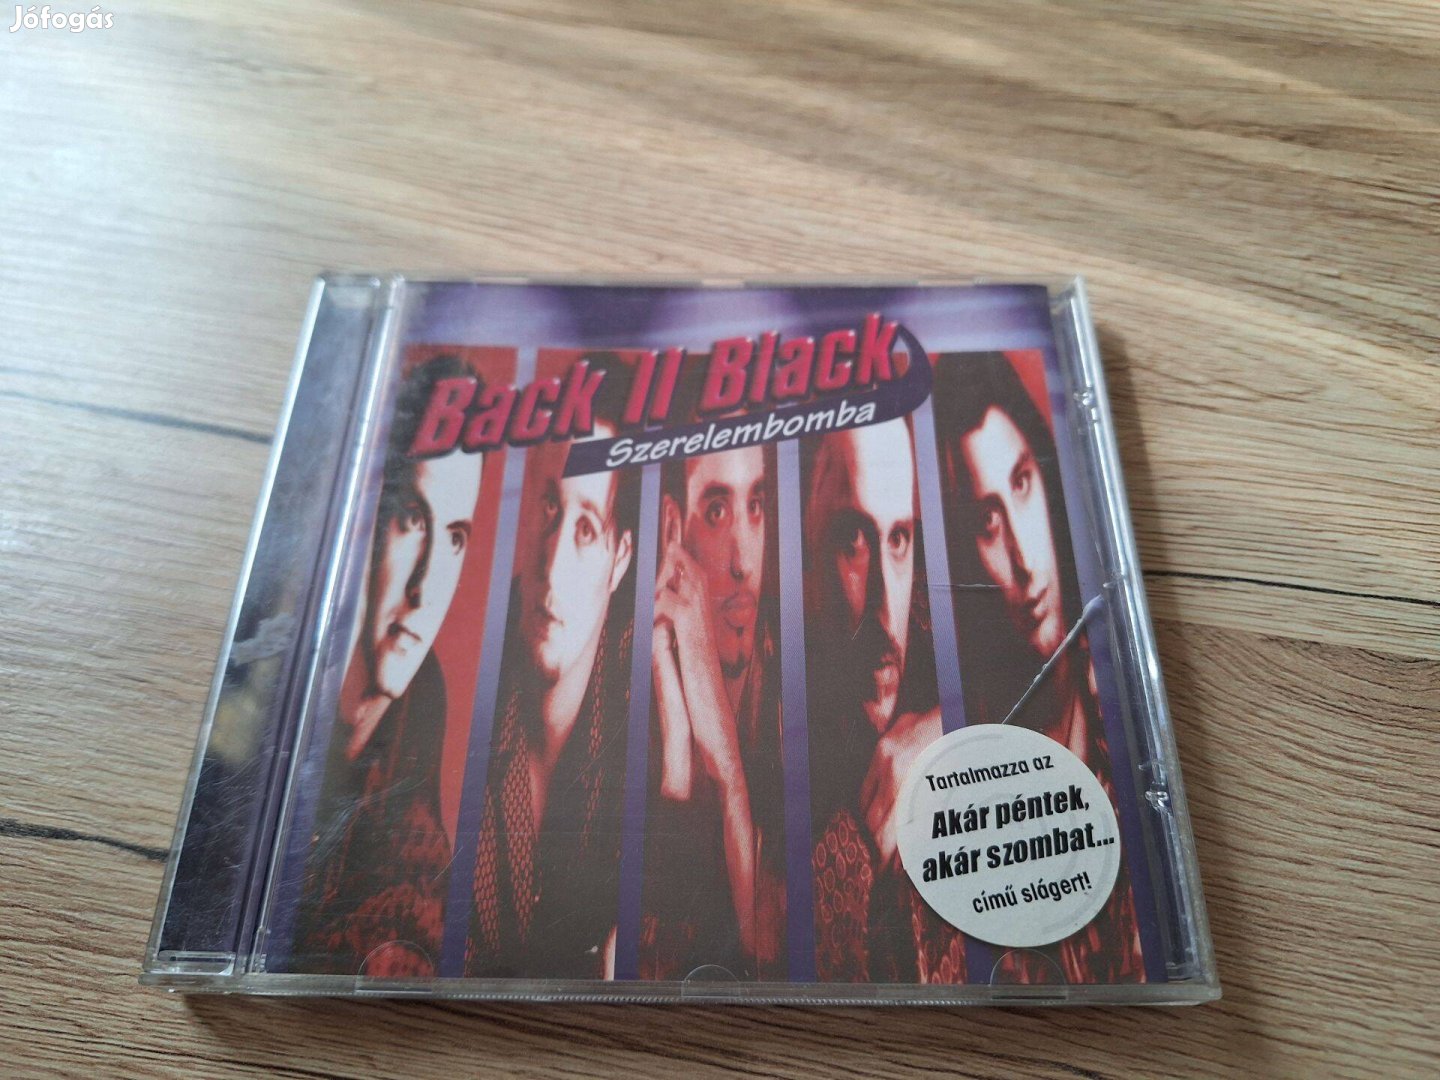 Back II Black Szerelembomba CD lemez!